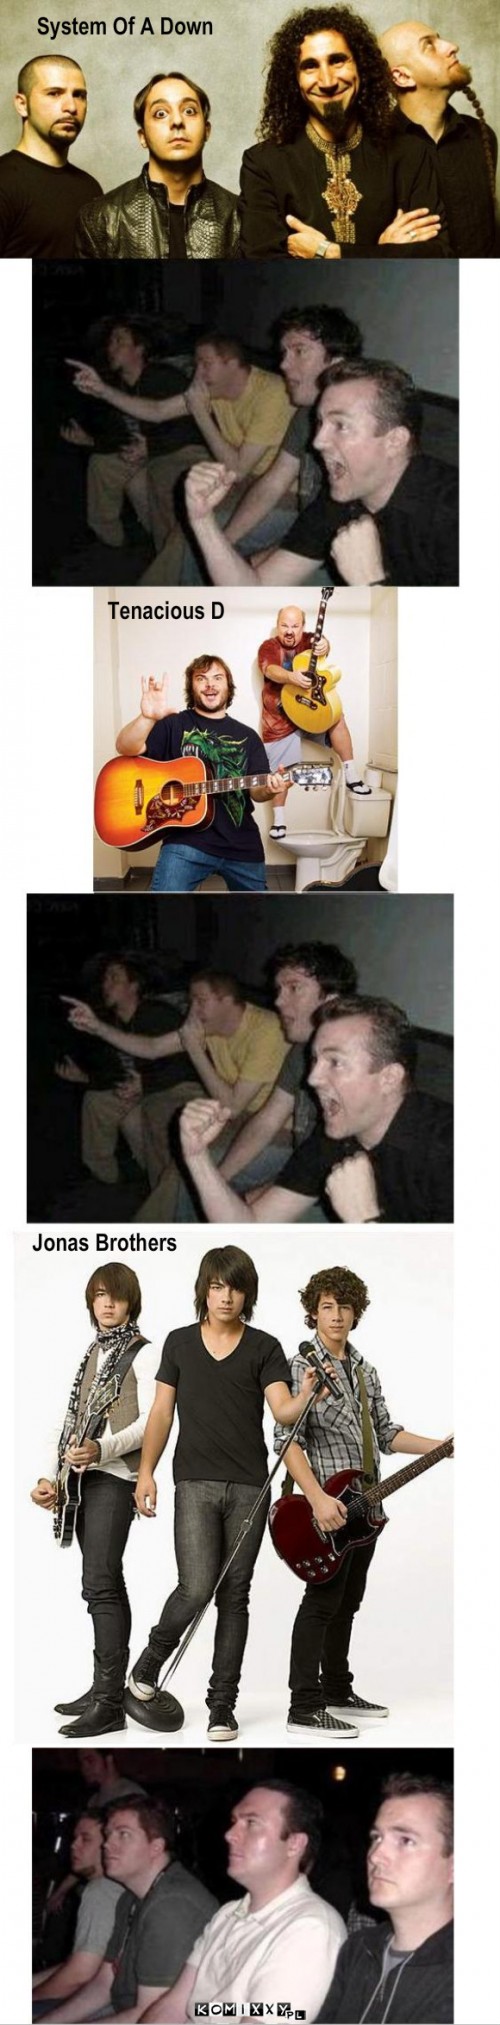 Muzyka – Tenacious D System Of A Down Jonas Brothers 